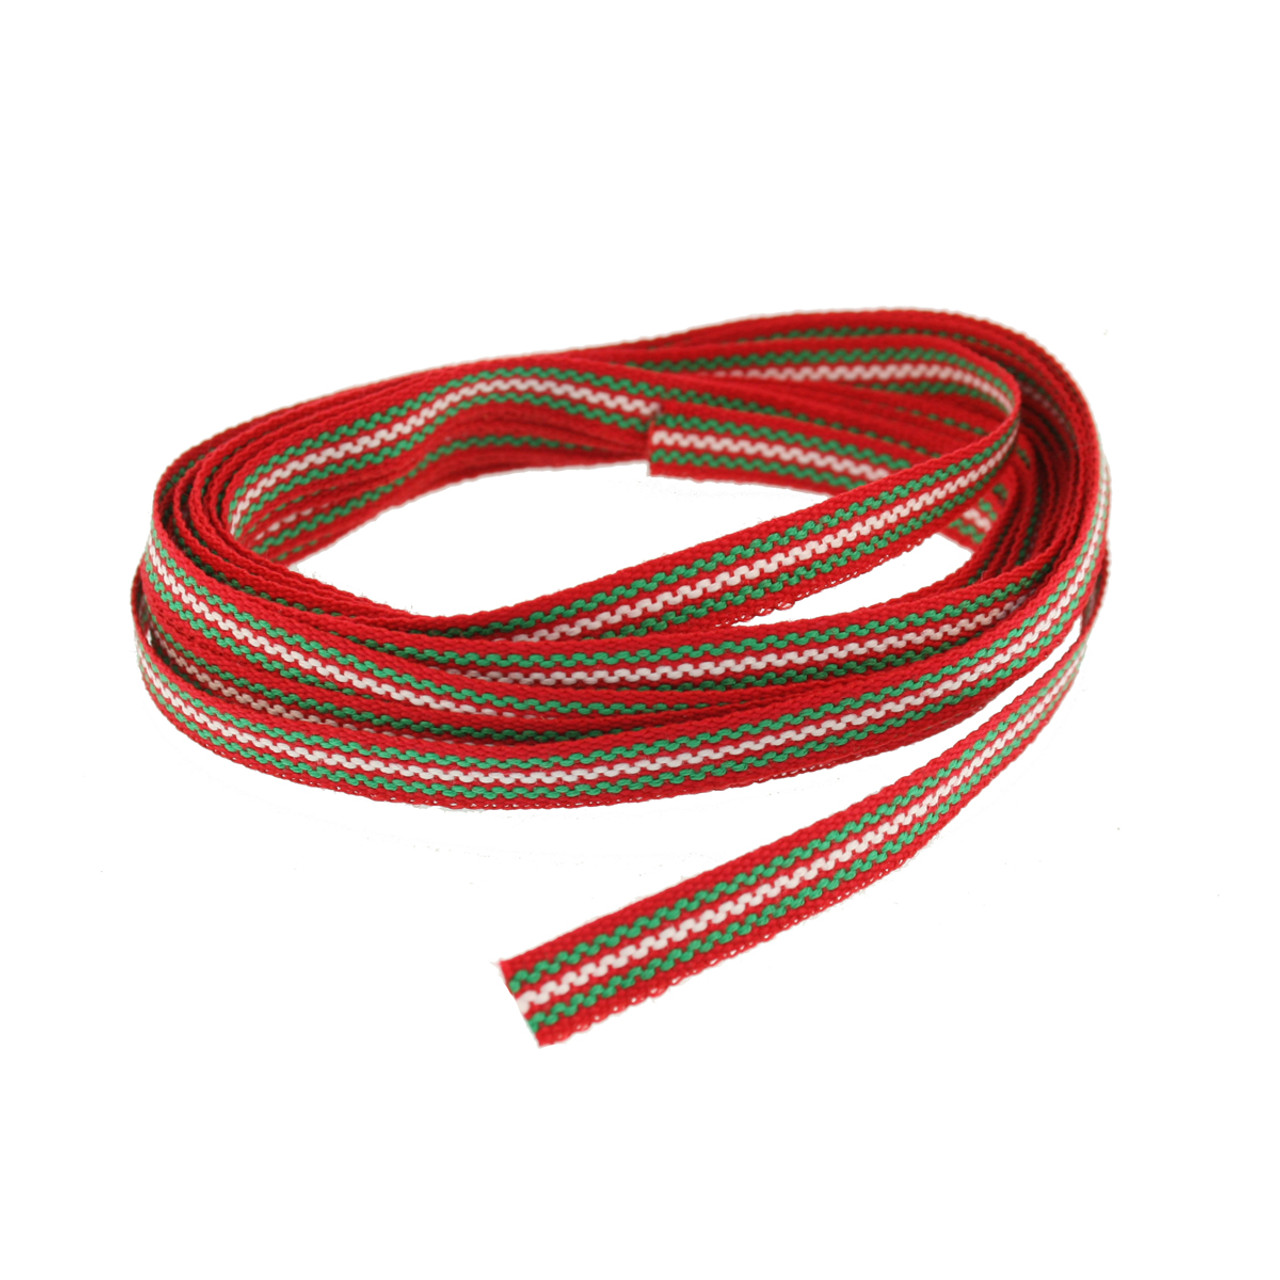 Ribbon - Red, Green & White - 1/4